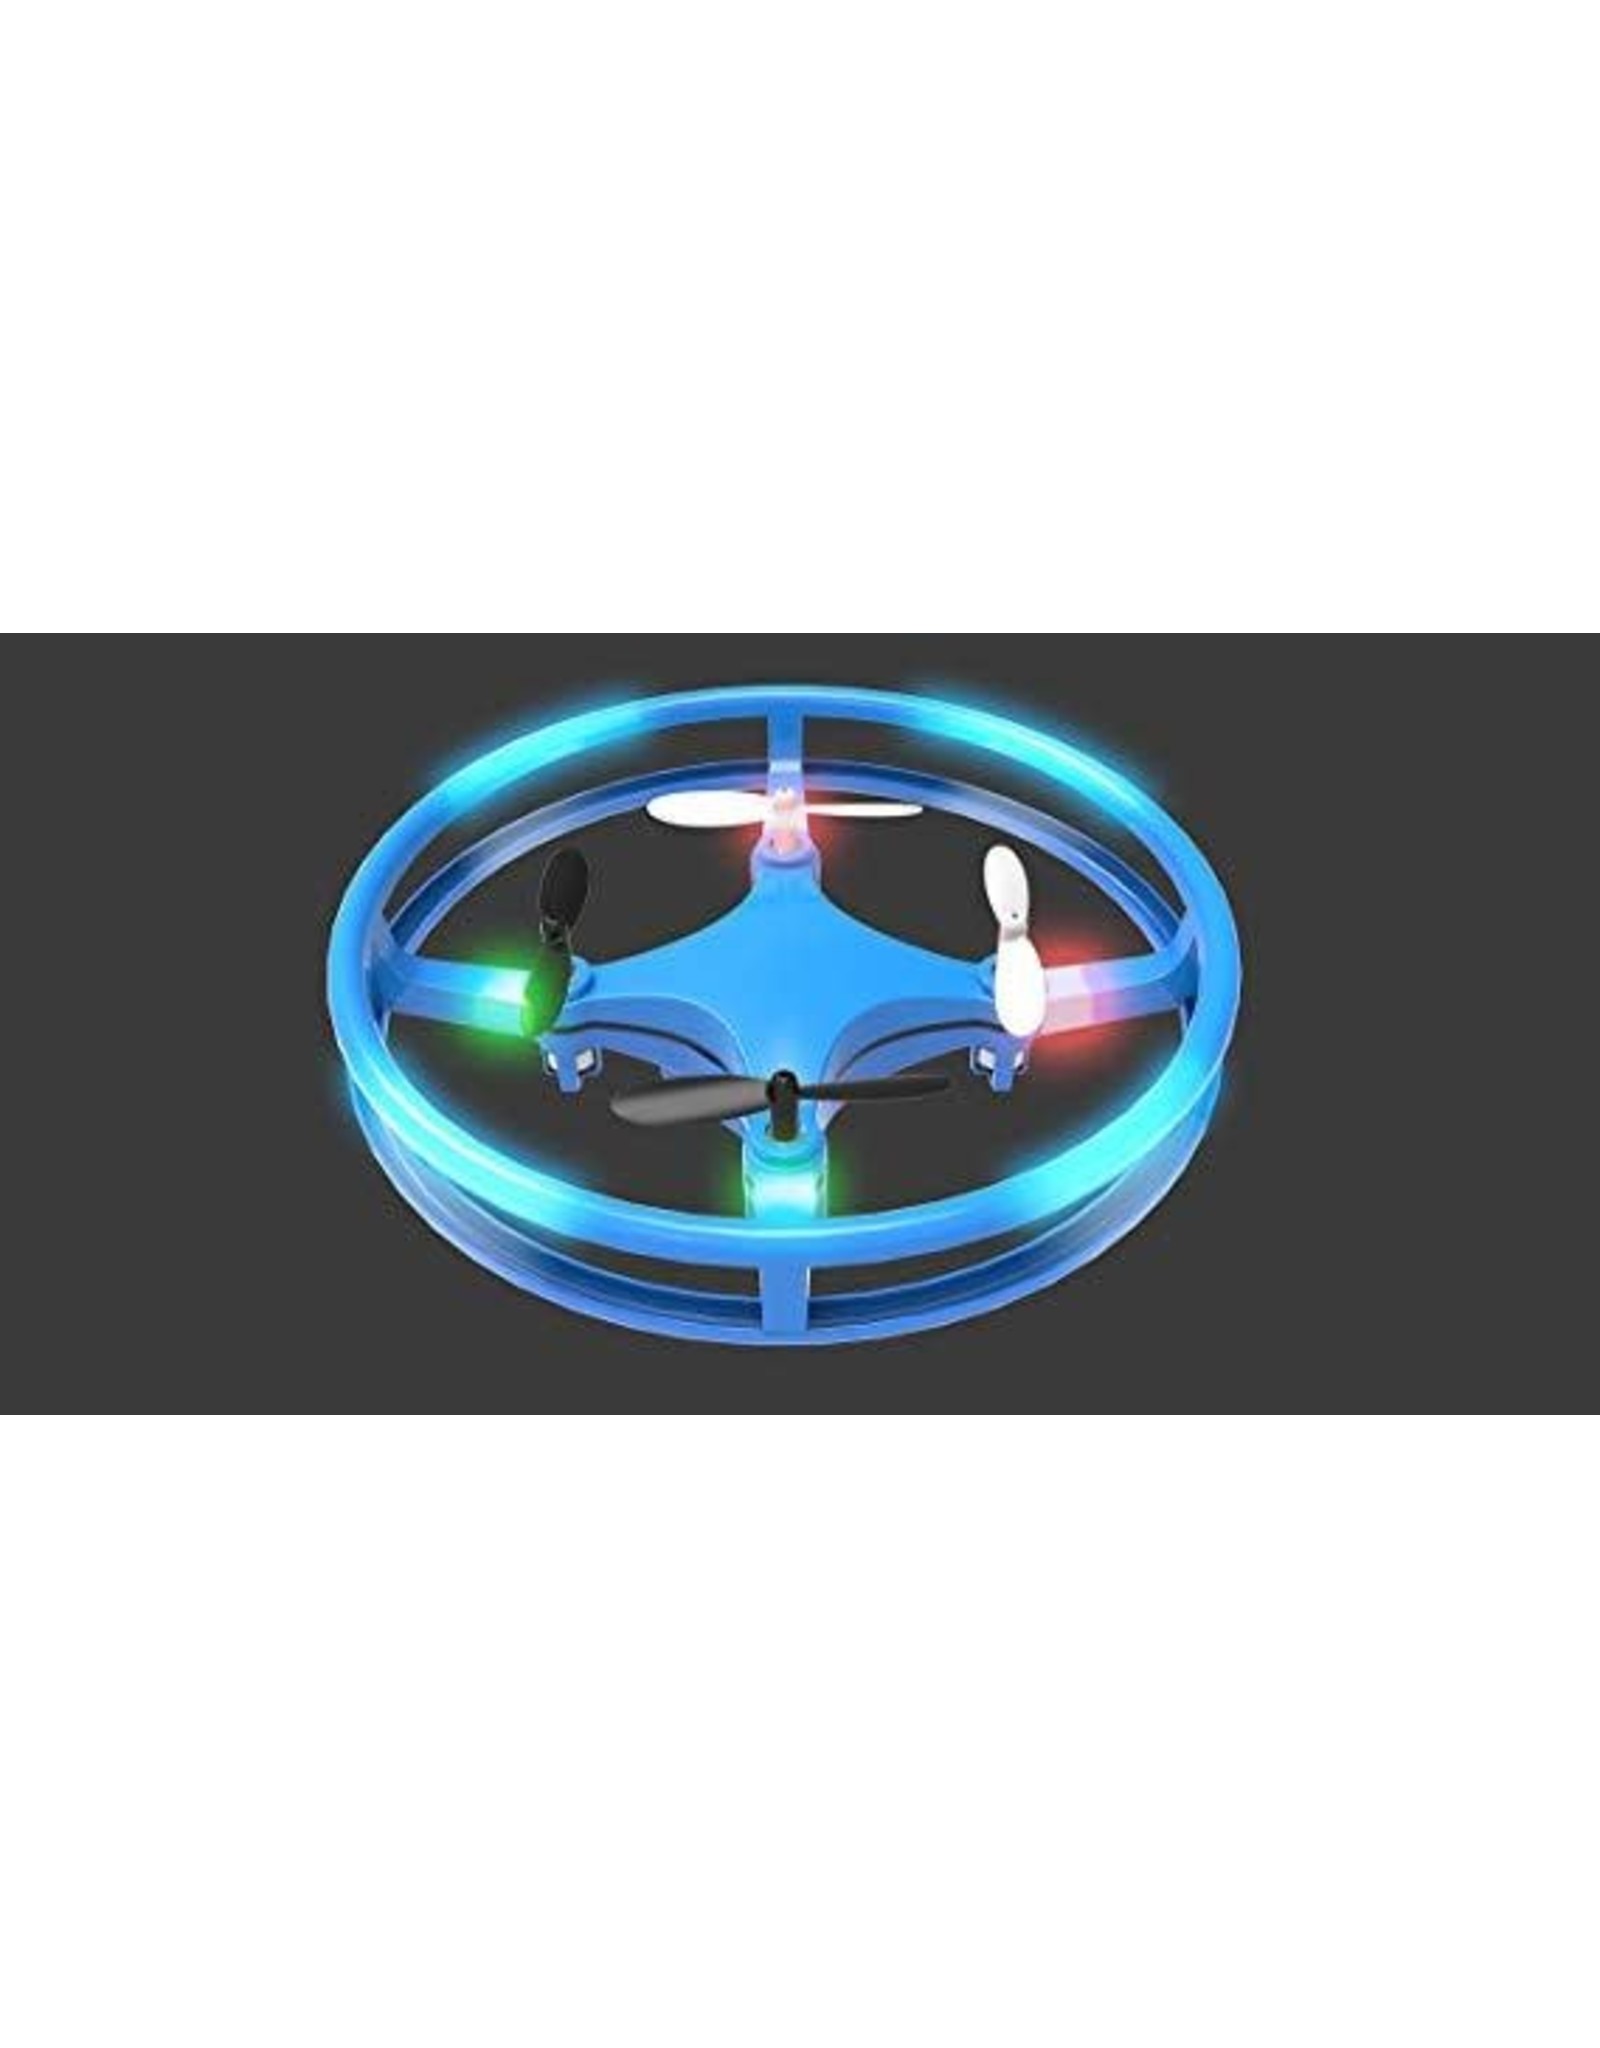 Disc Drone Blue